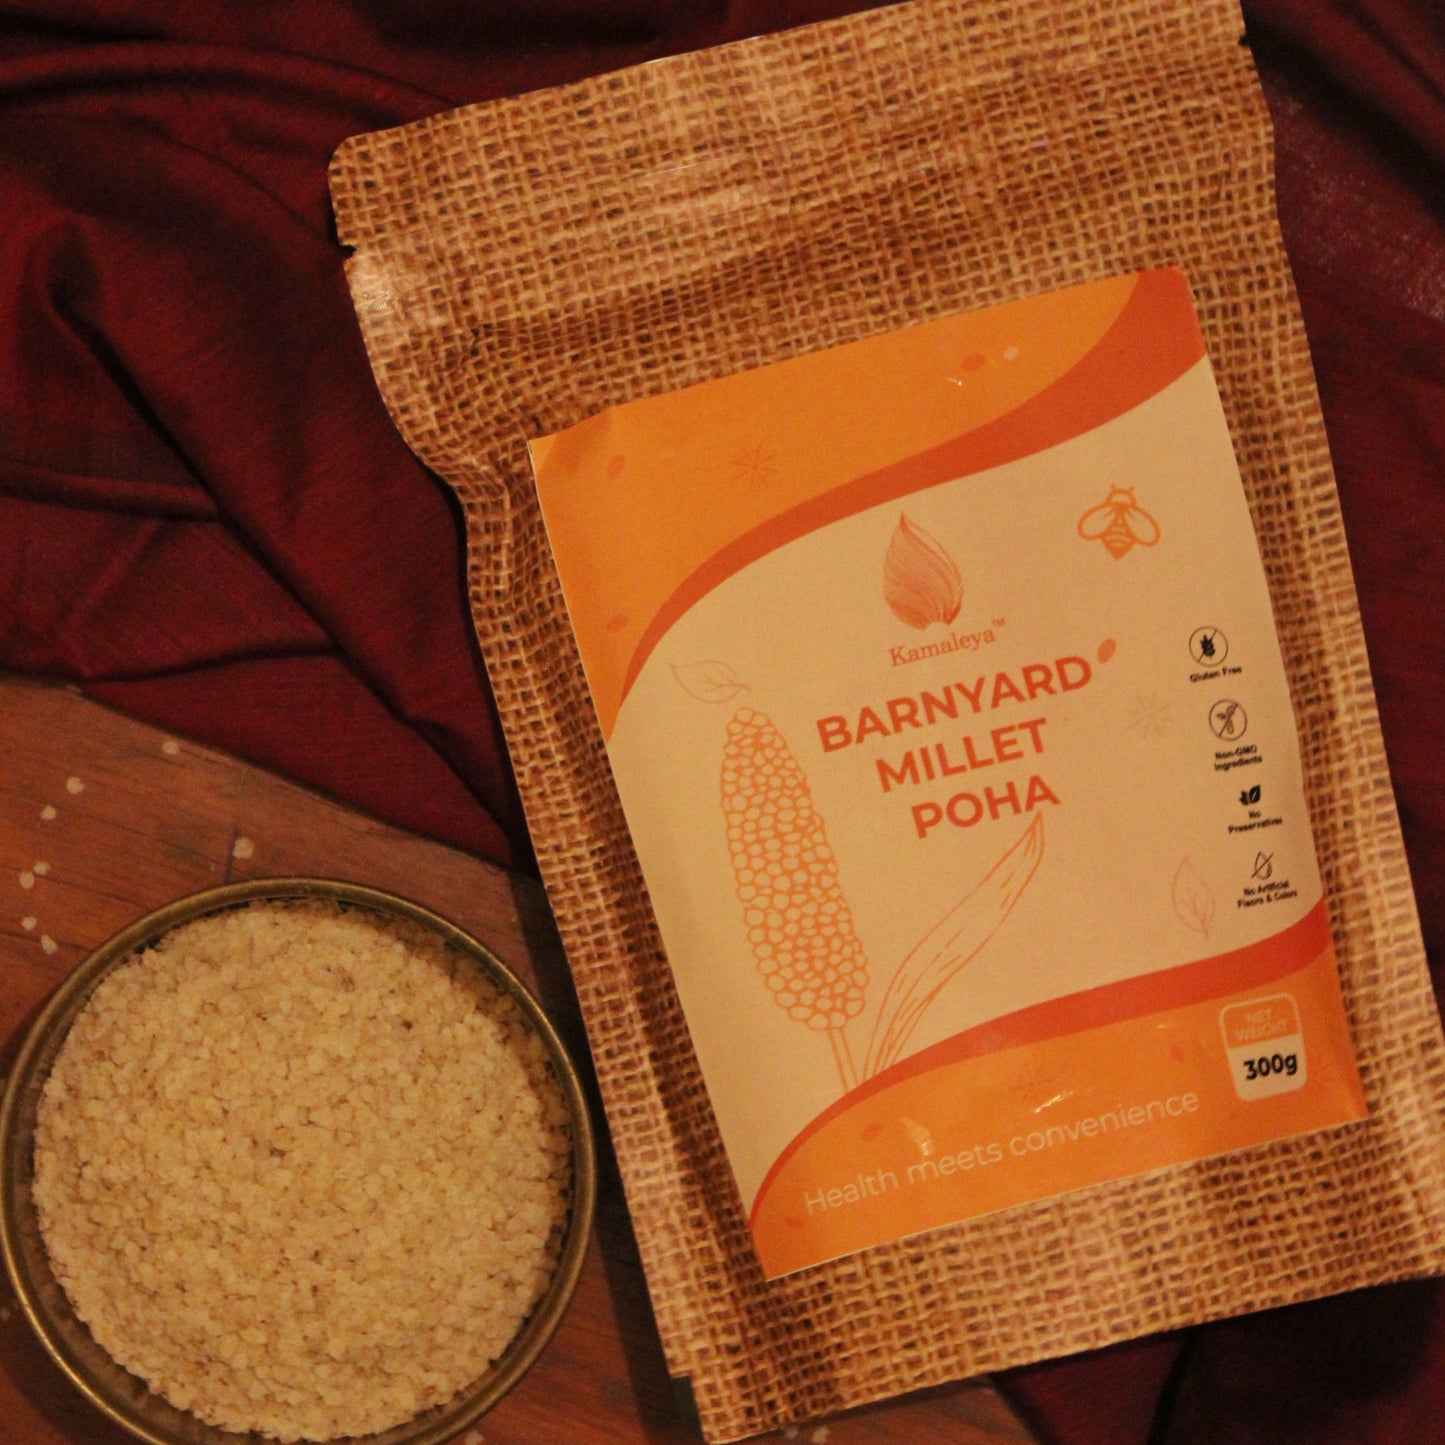 Barnyard Millet Poha/Aval (300 gms) - Kamaleya 